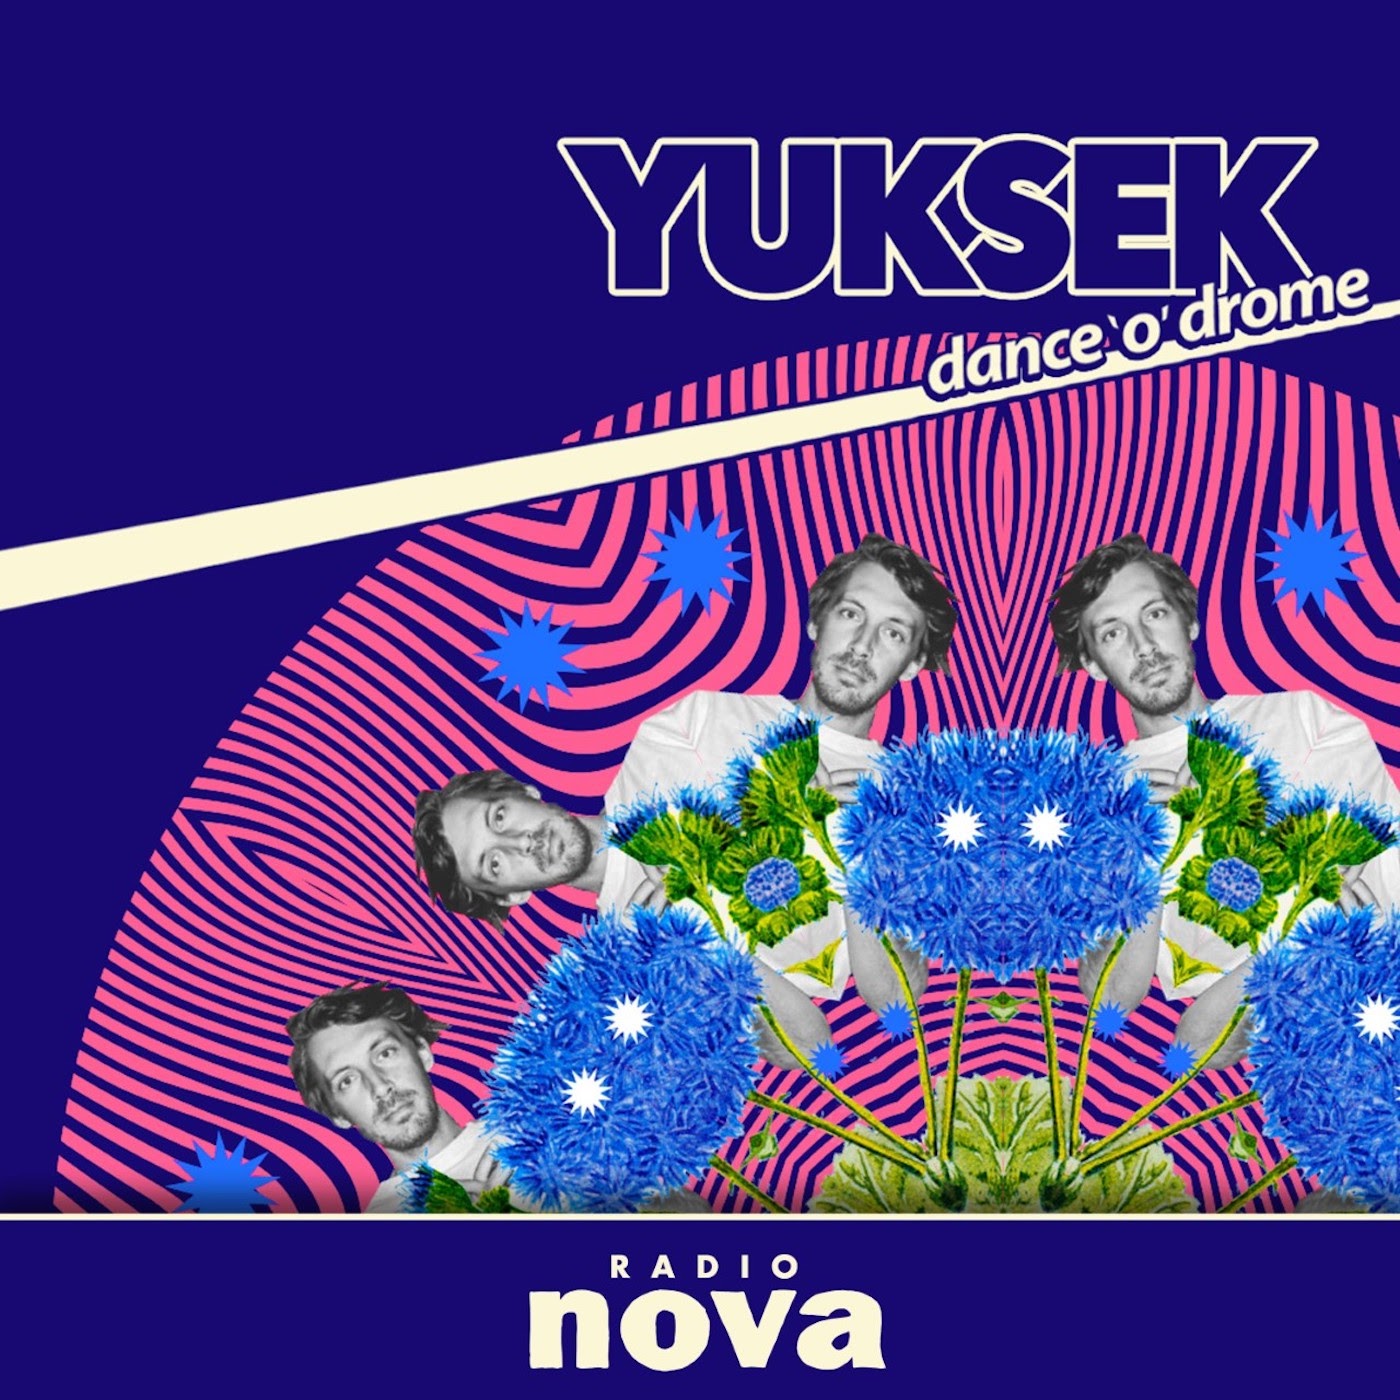 « Dance’o’drome » #23 : le mix de Yuksek, avec Moscoman, sur Radio Nova